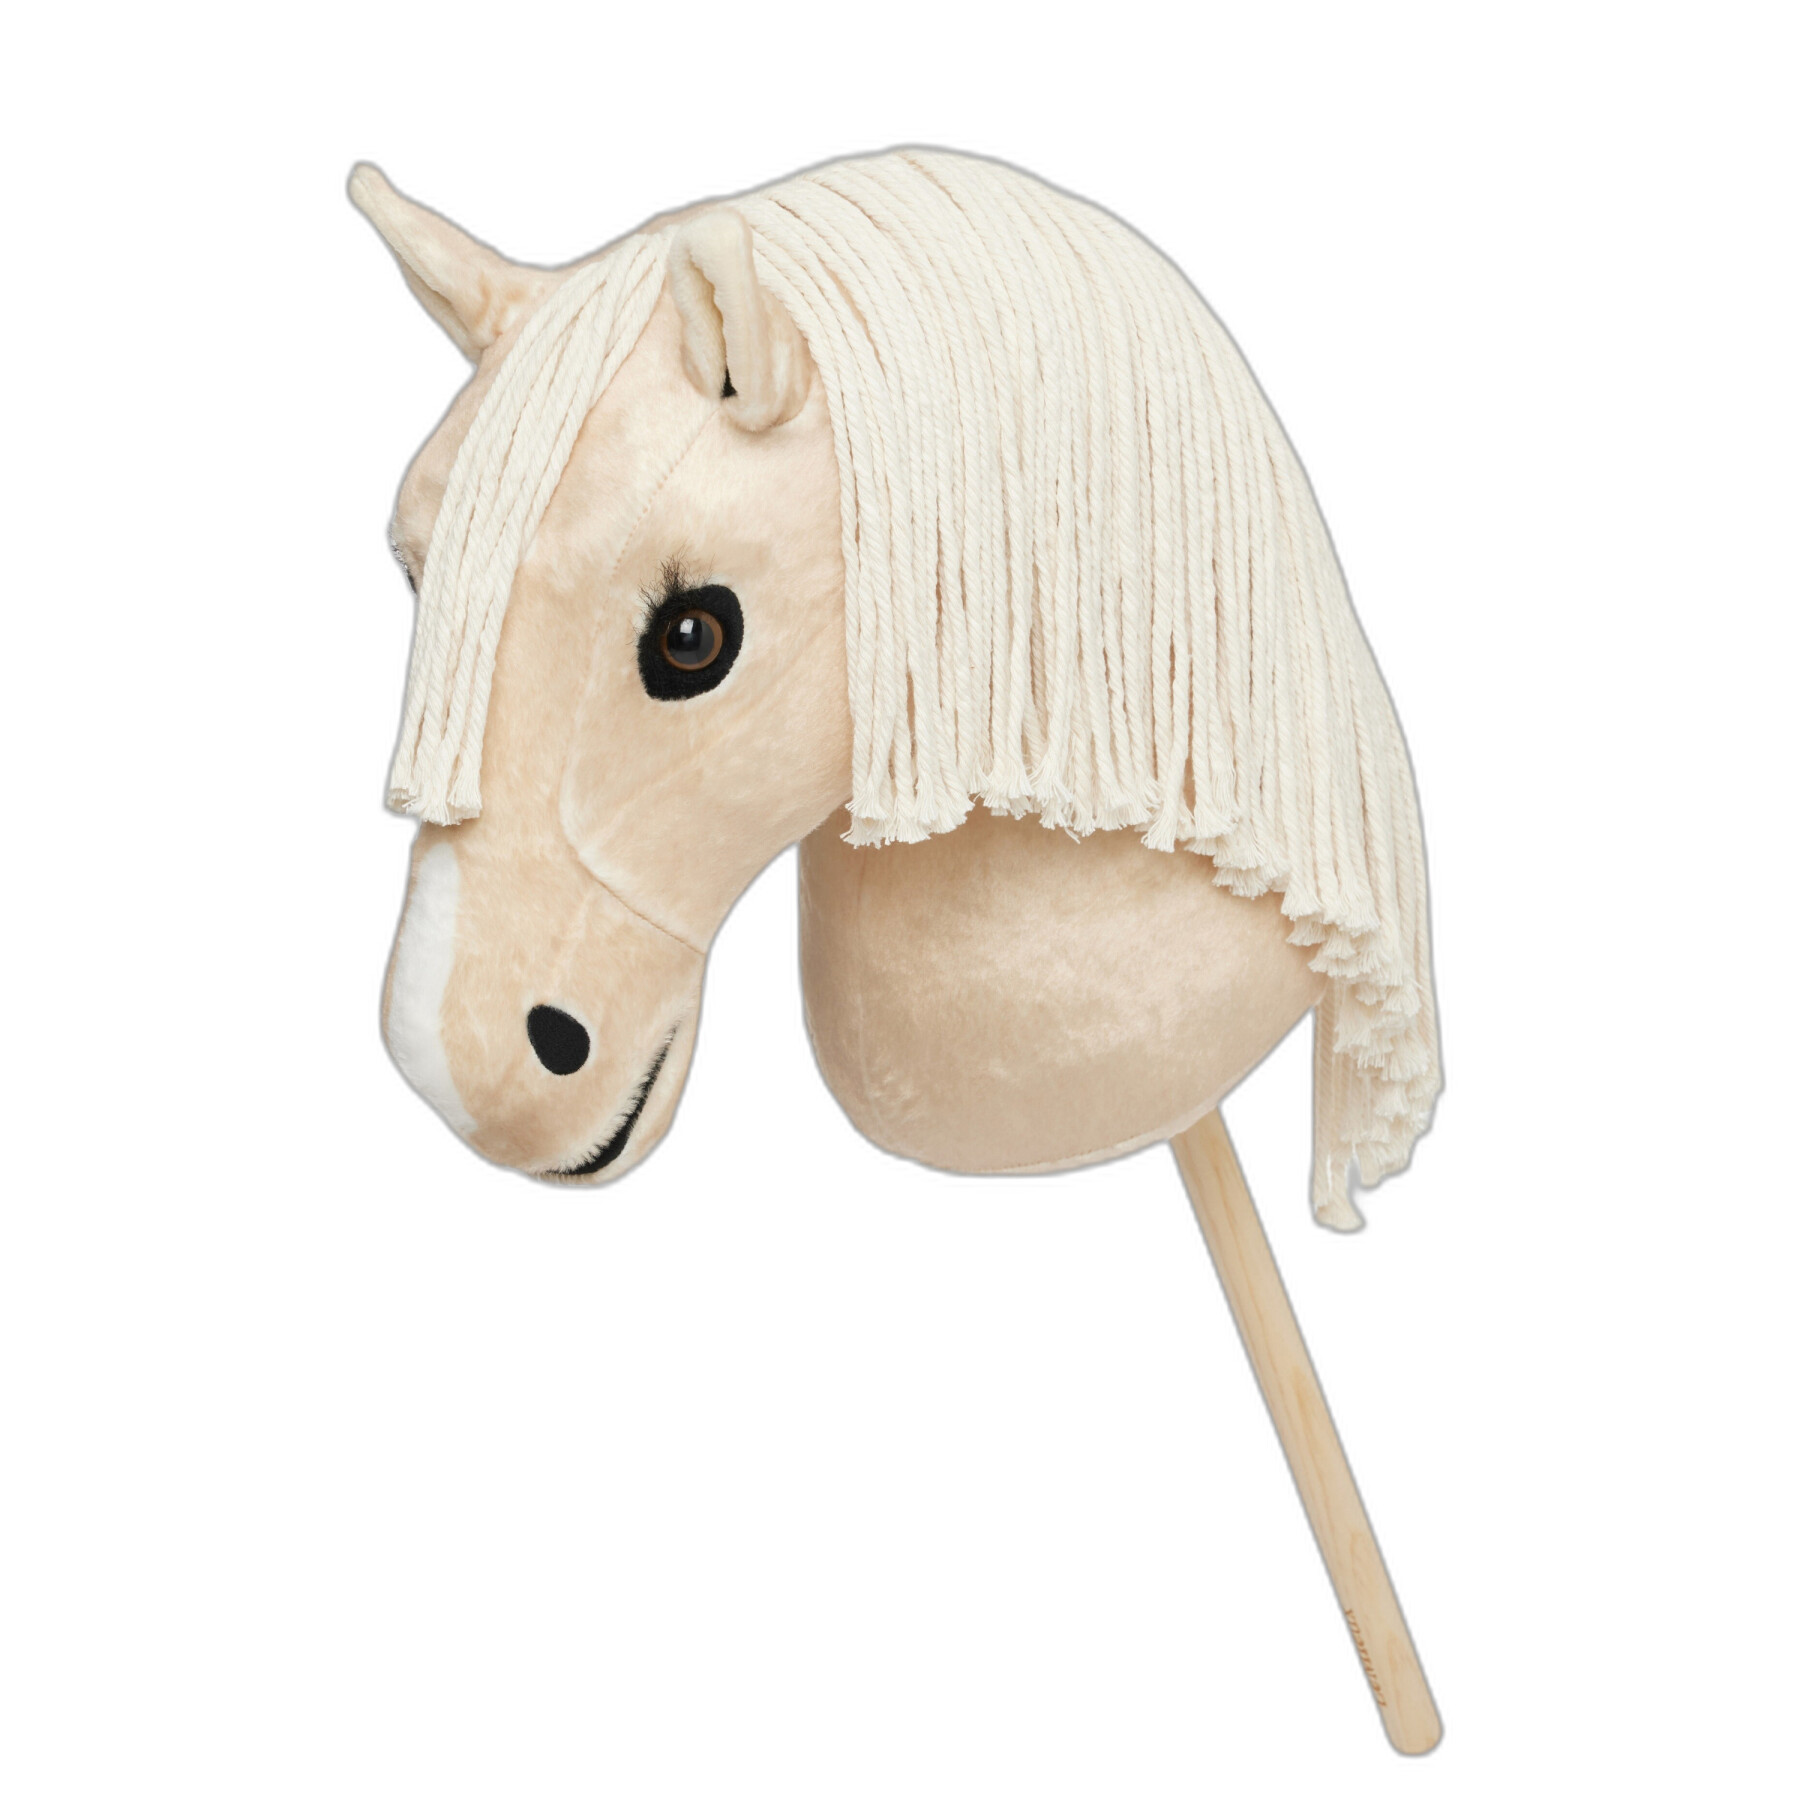 Paard speelgoed LeMieux Hobby Horse Popcorn